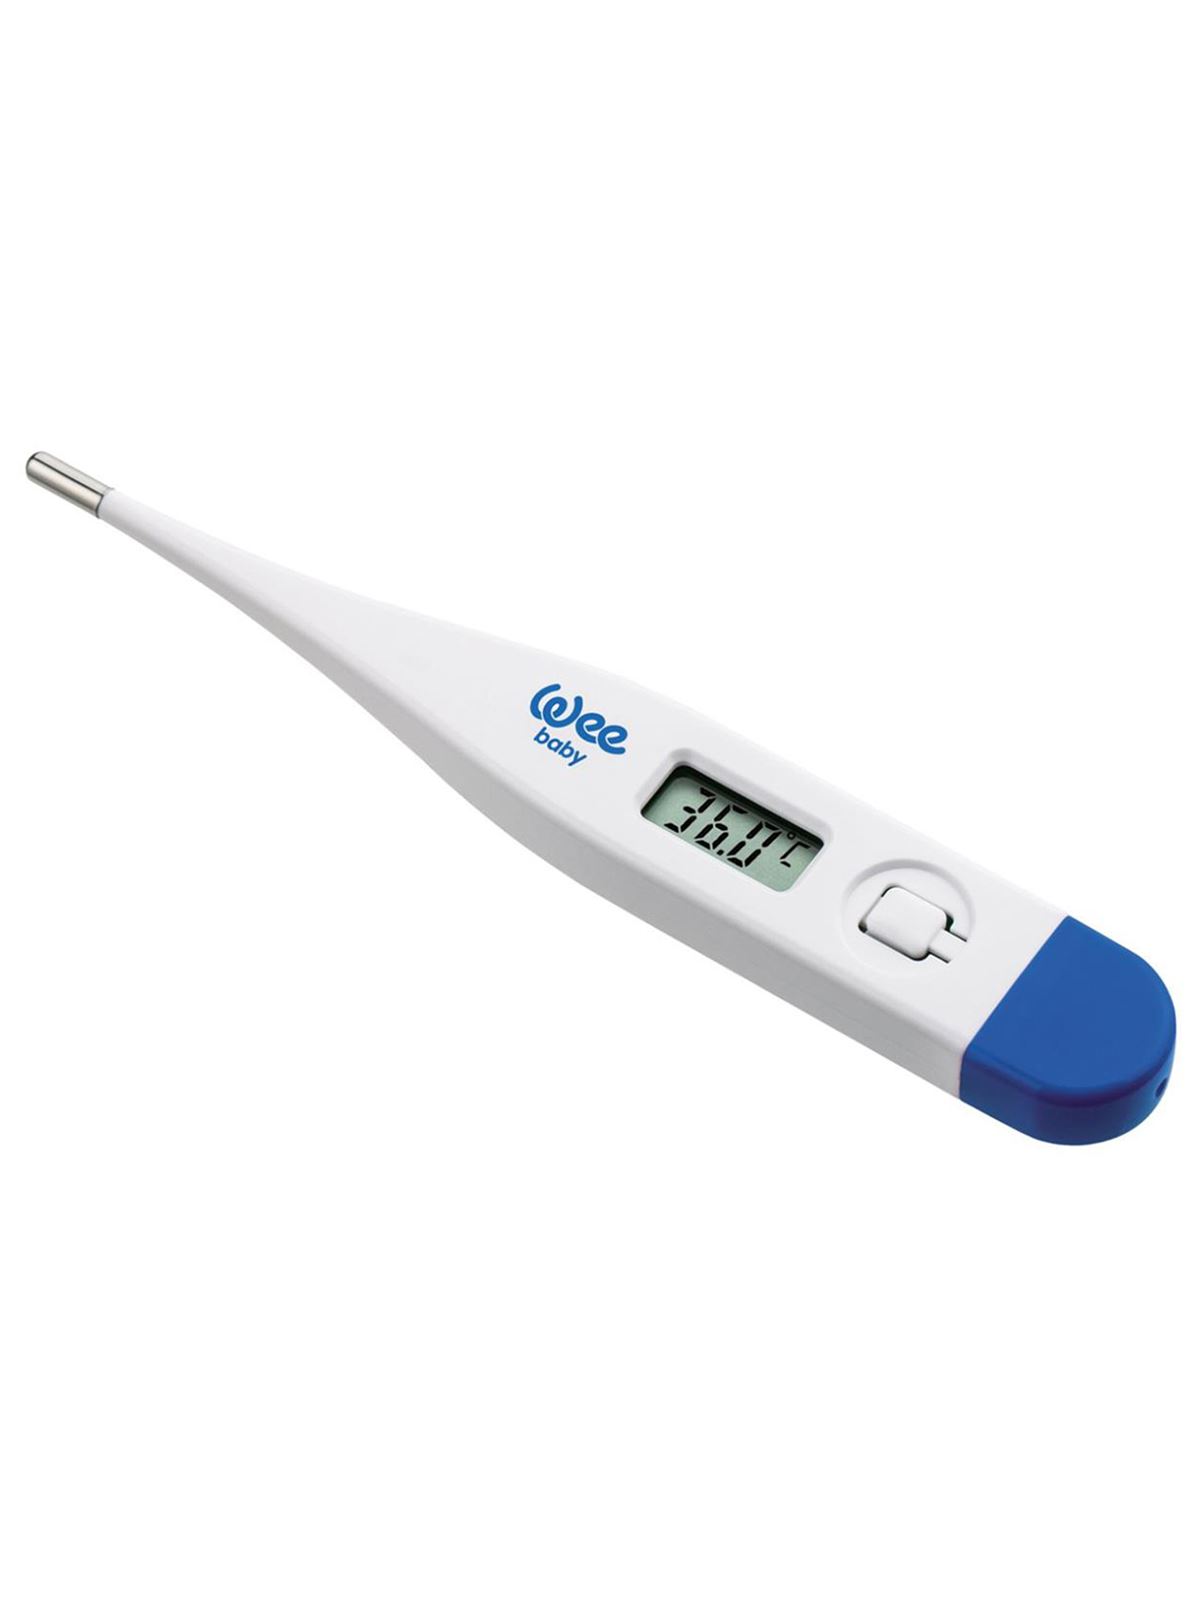 Wee Baby Digital Çubuk Termometre